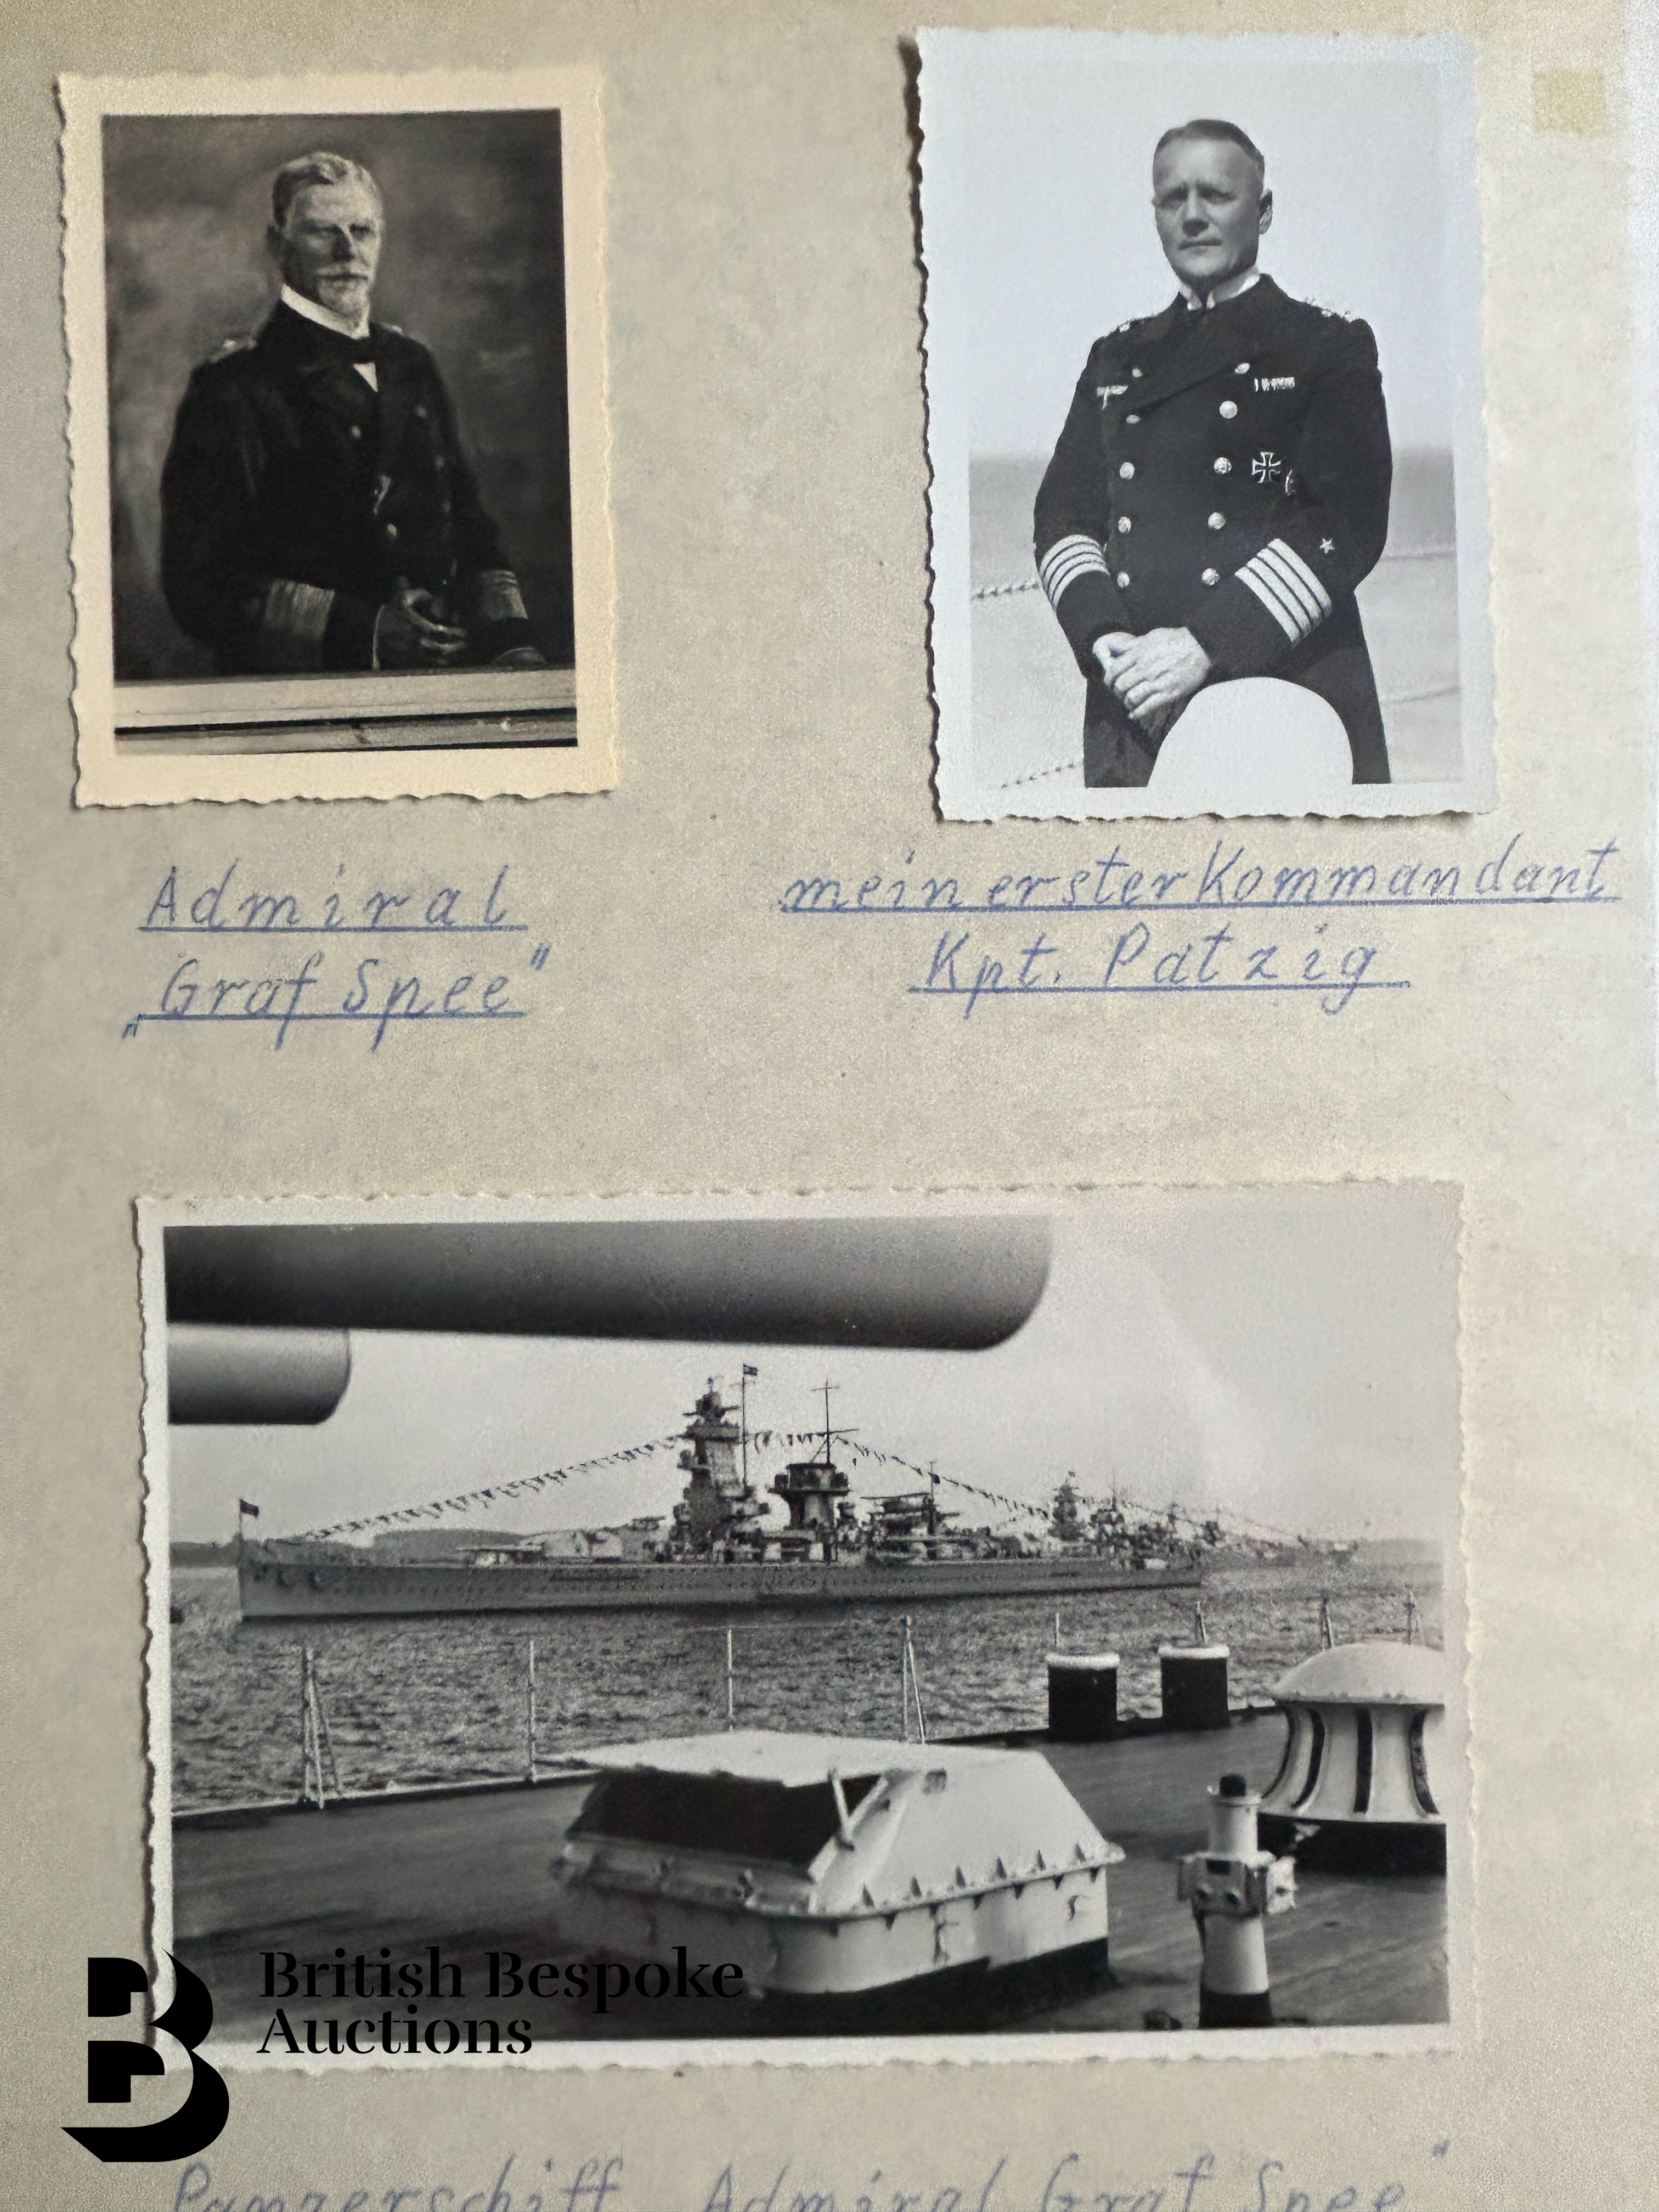 Graf Spee (Pocket Battleship) Interest, incl. Photographs, Documents, Miscellanea - Image 105 of 126